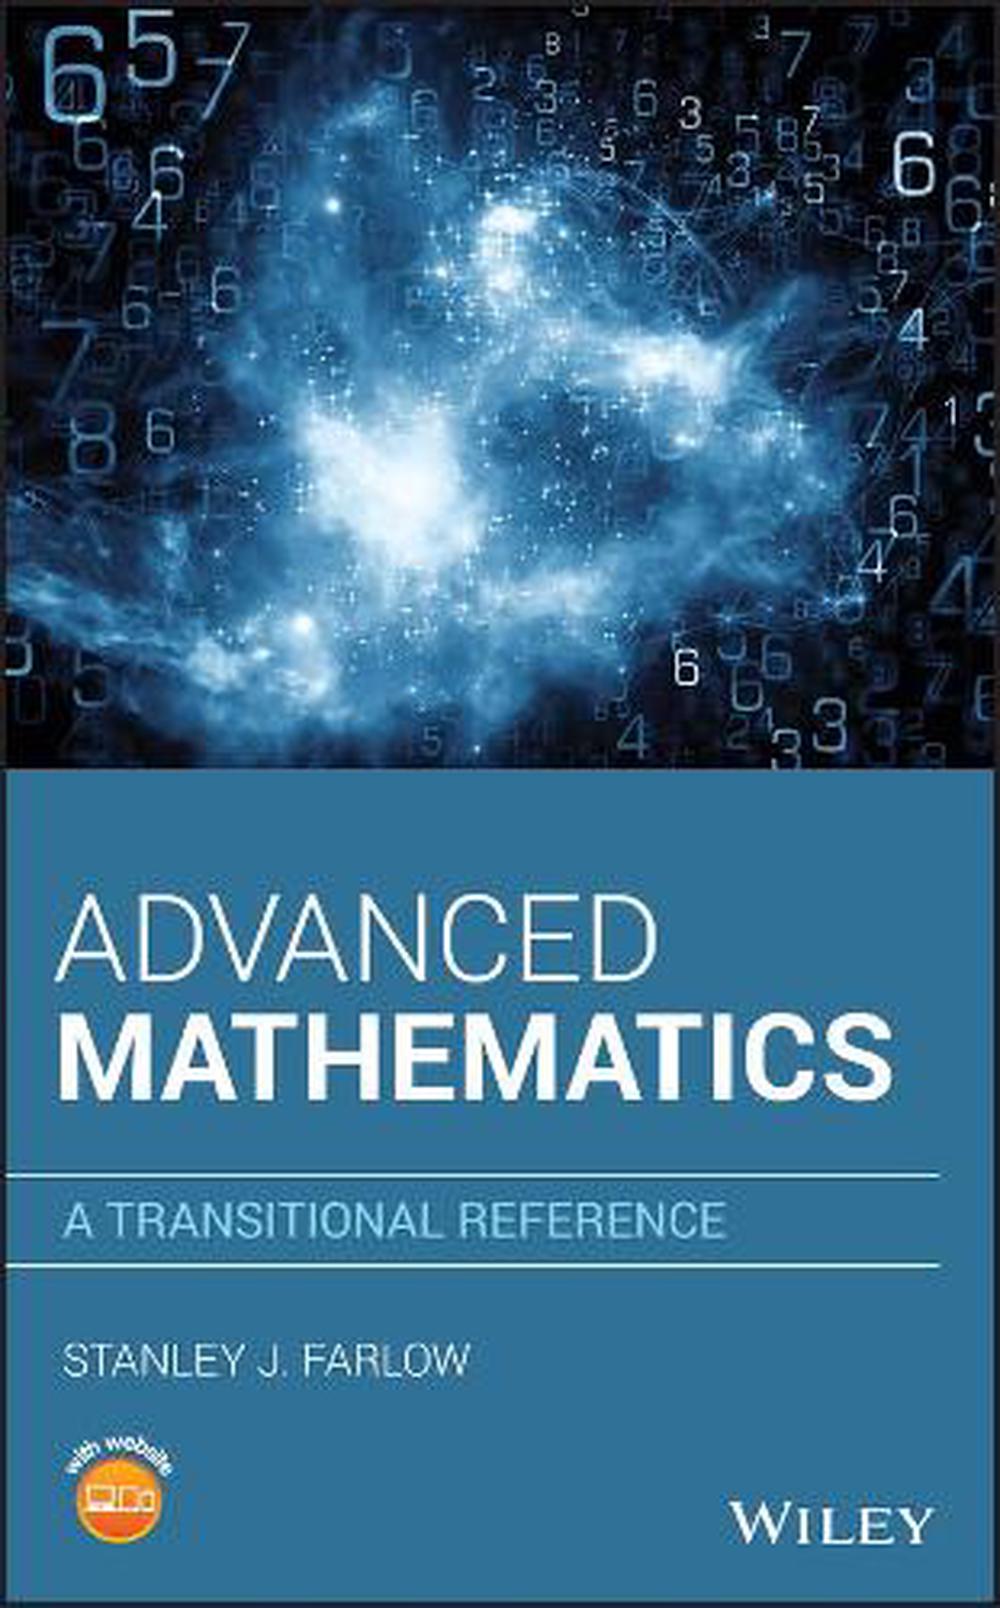 mathematics phd books